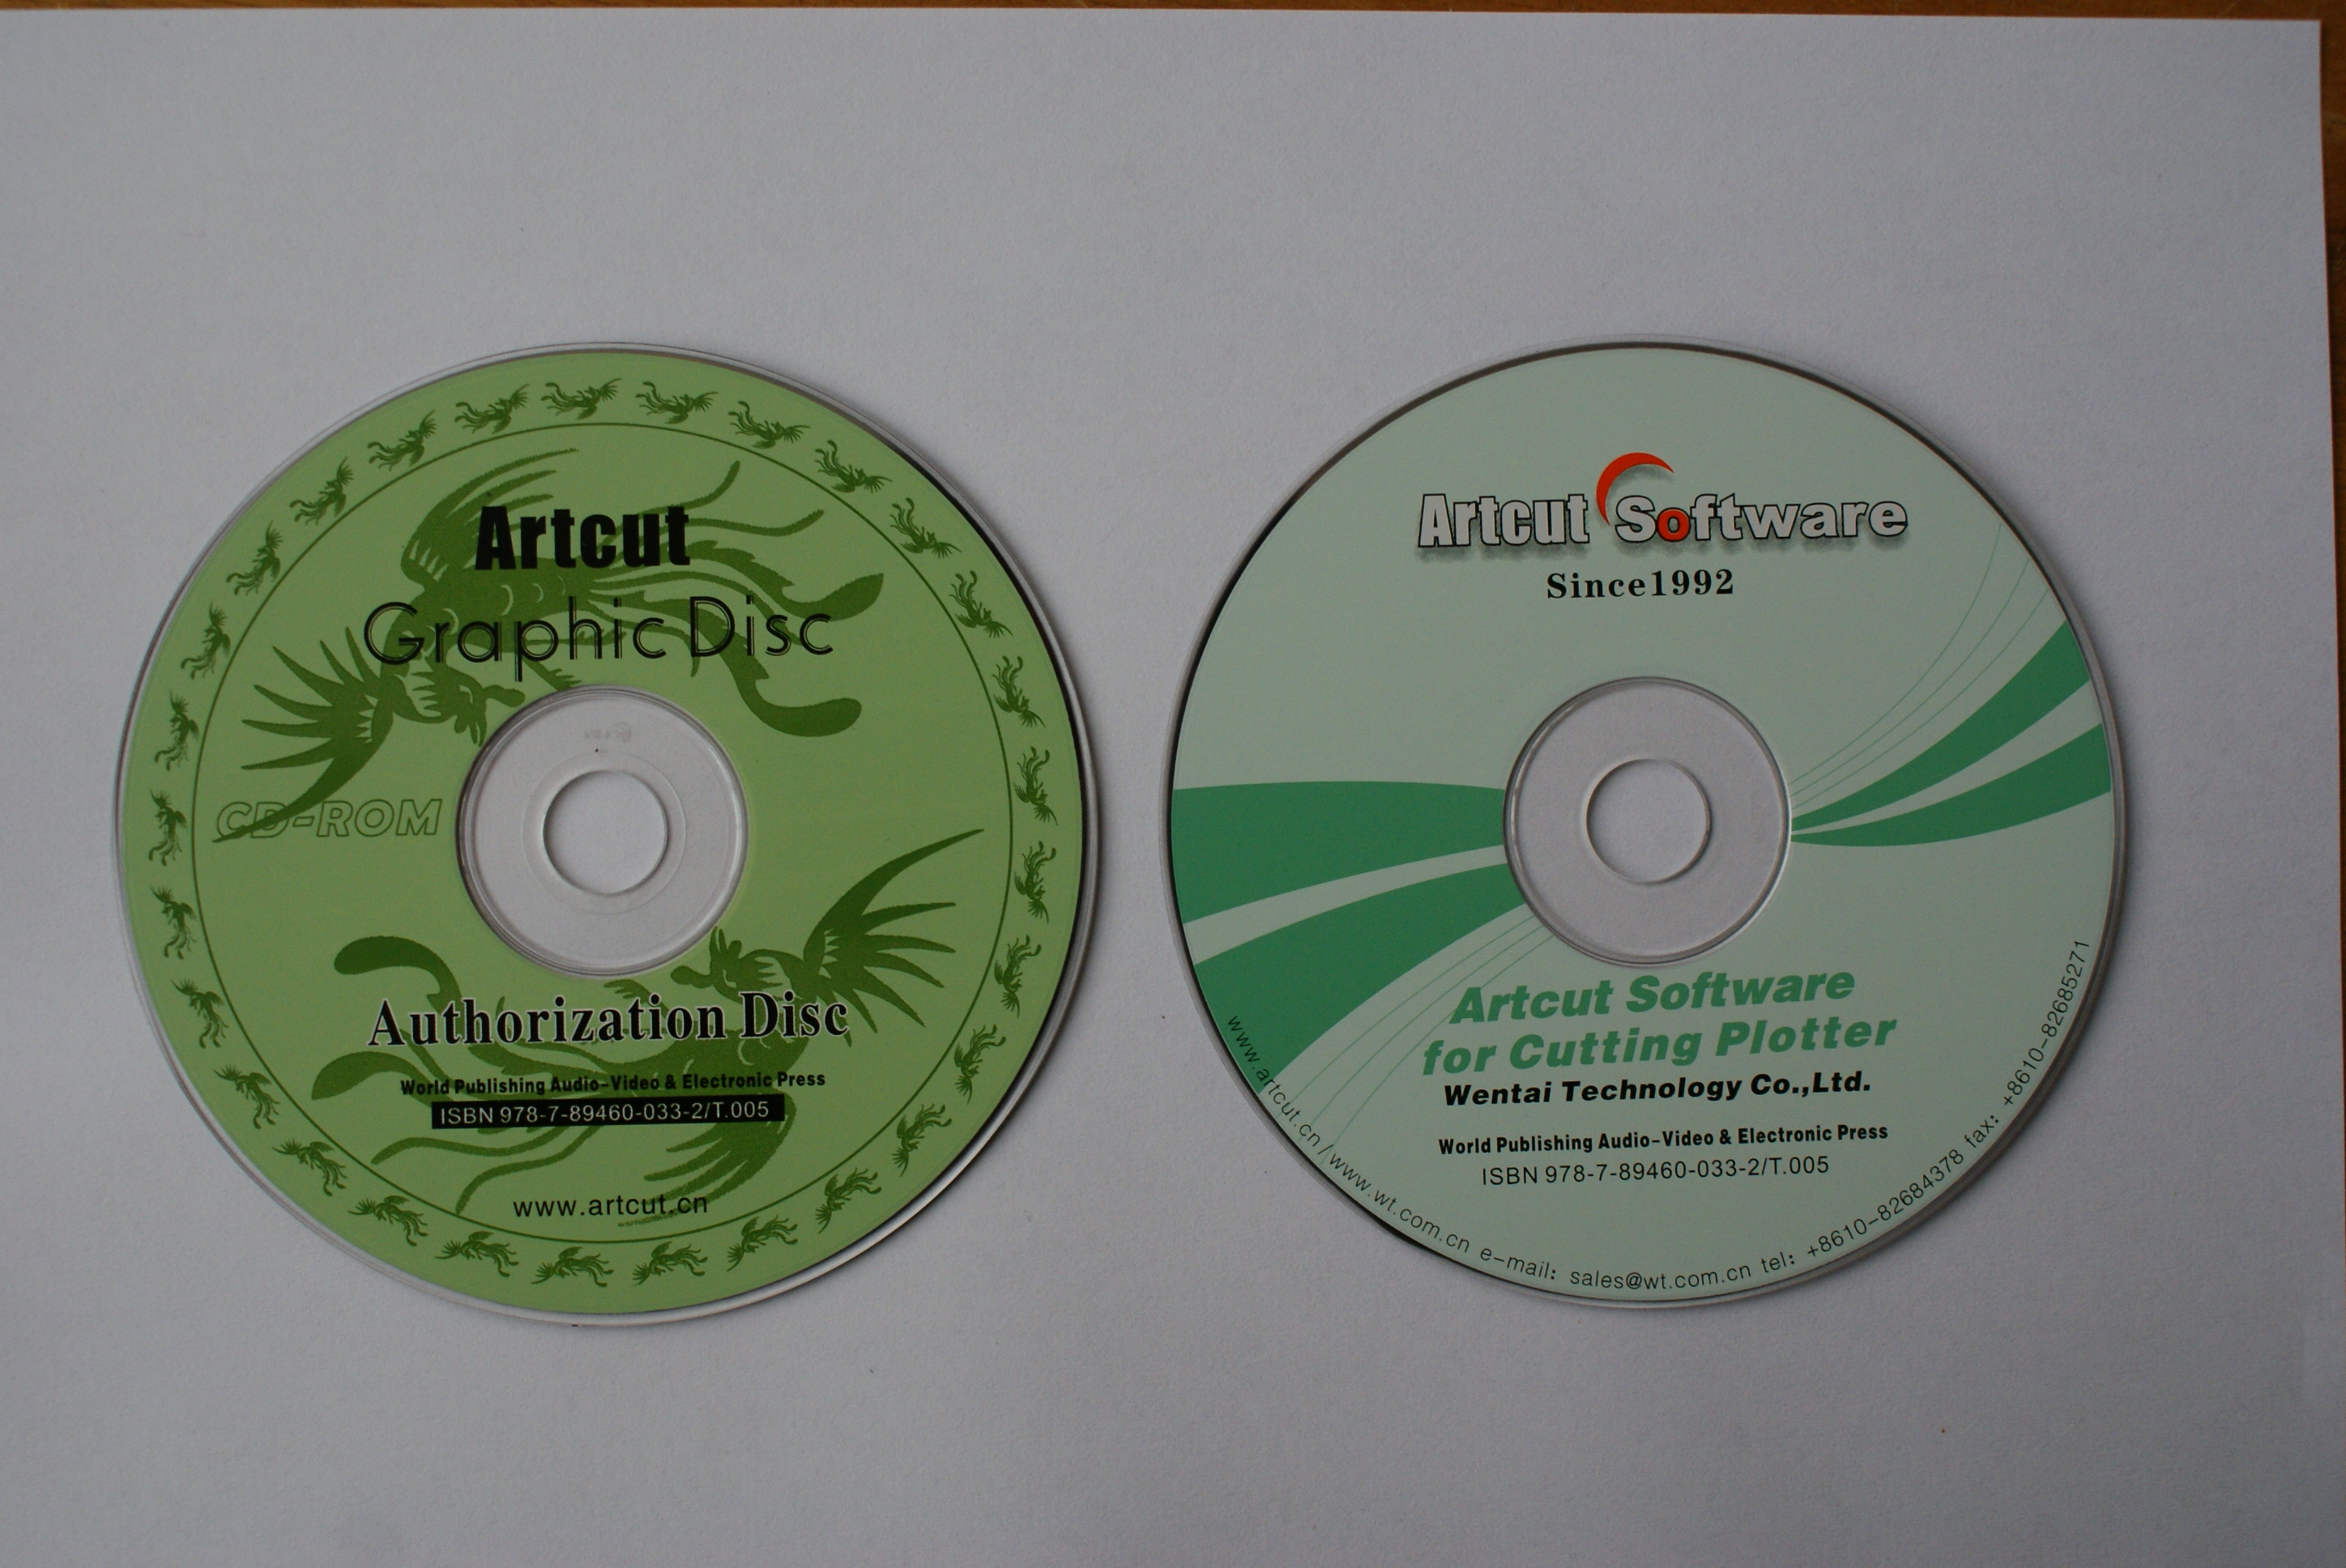 artcut 2009 software free download torrent